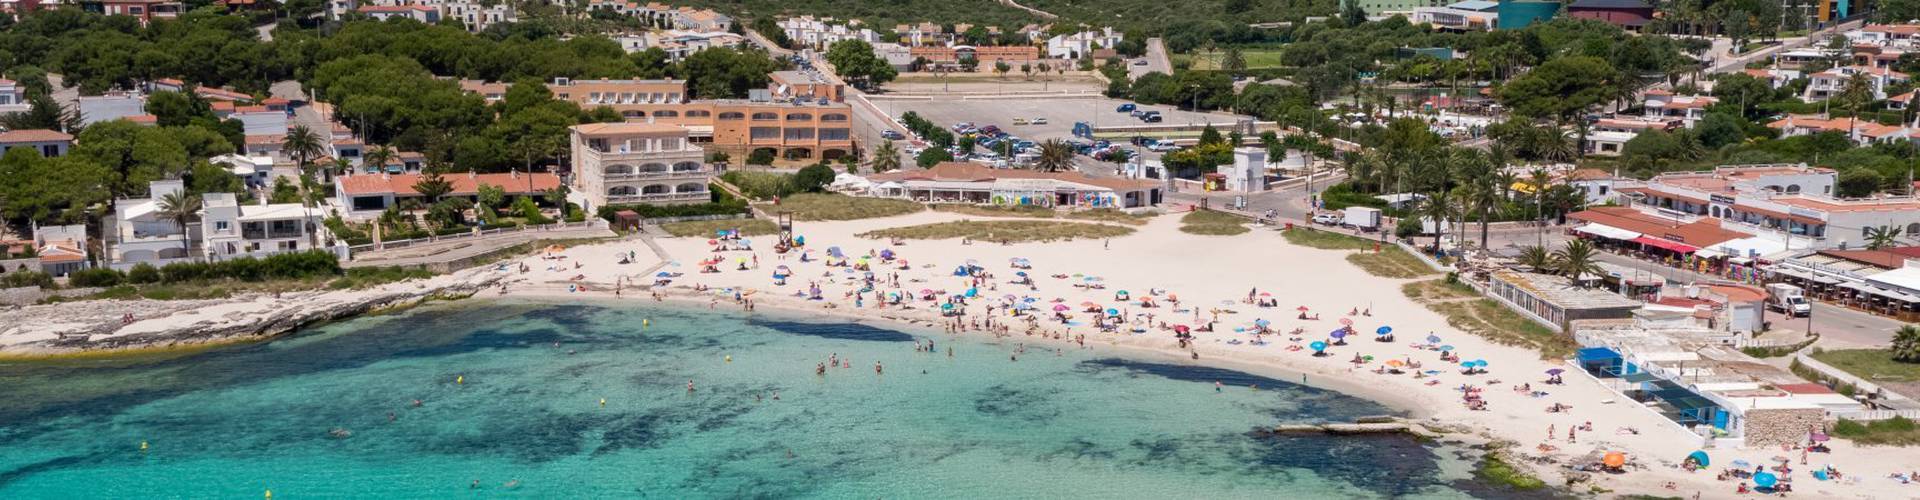 Comitas Hotels - Menorca - 